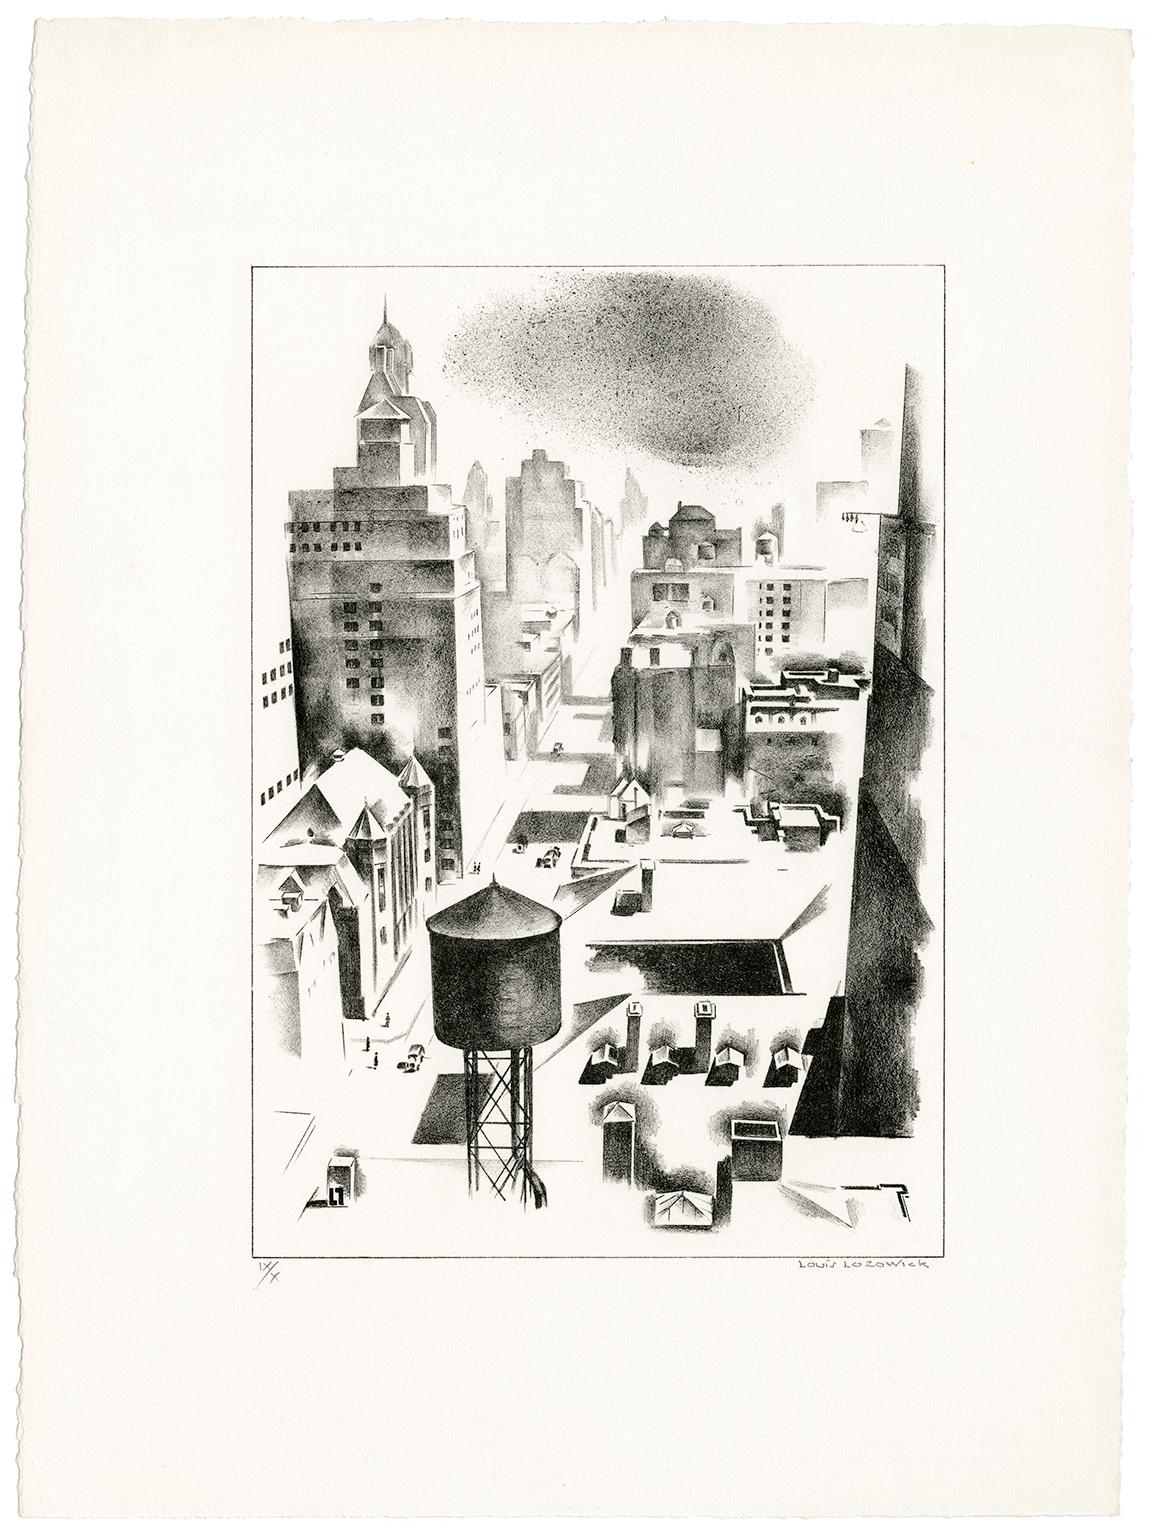 Madison Avenue - Print by Louis Lozowick